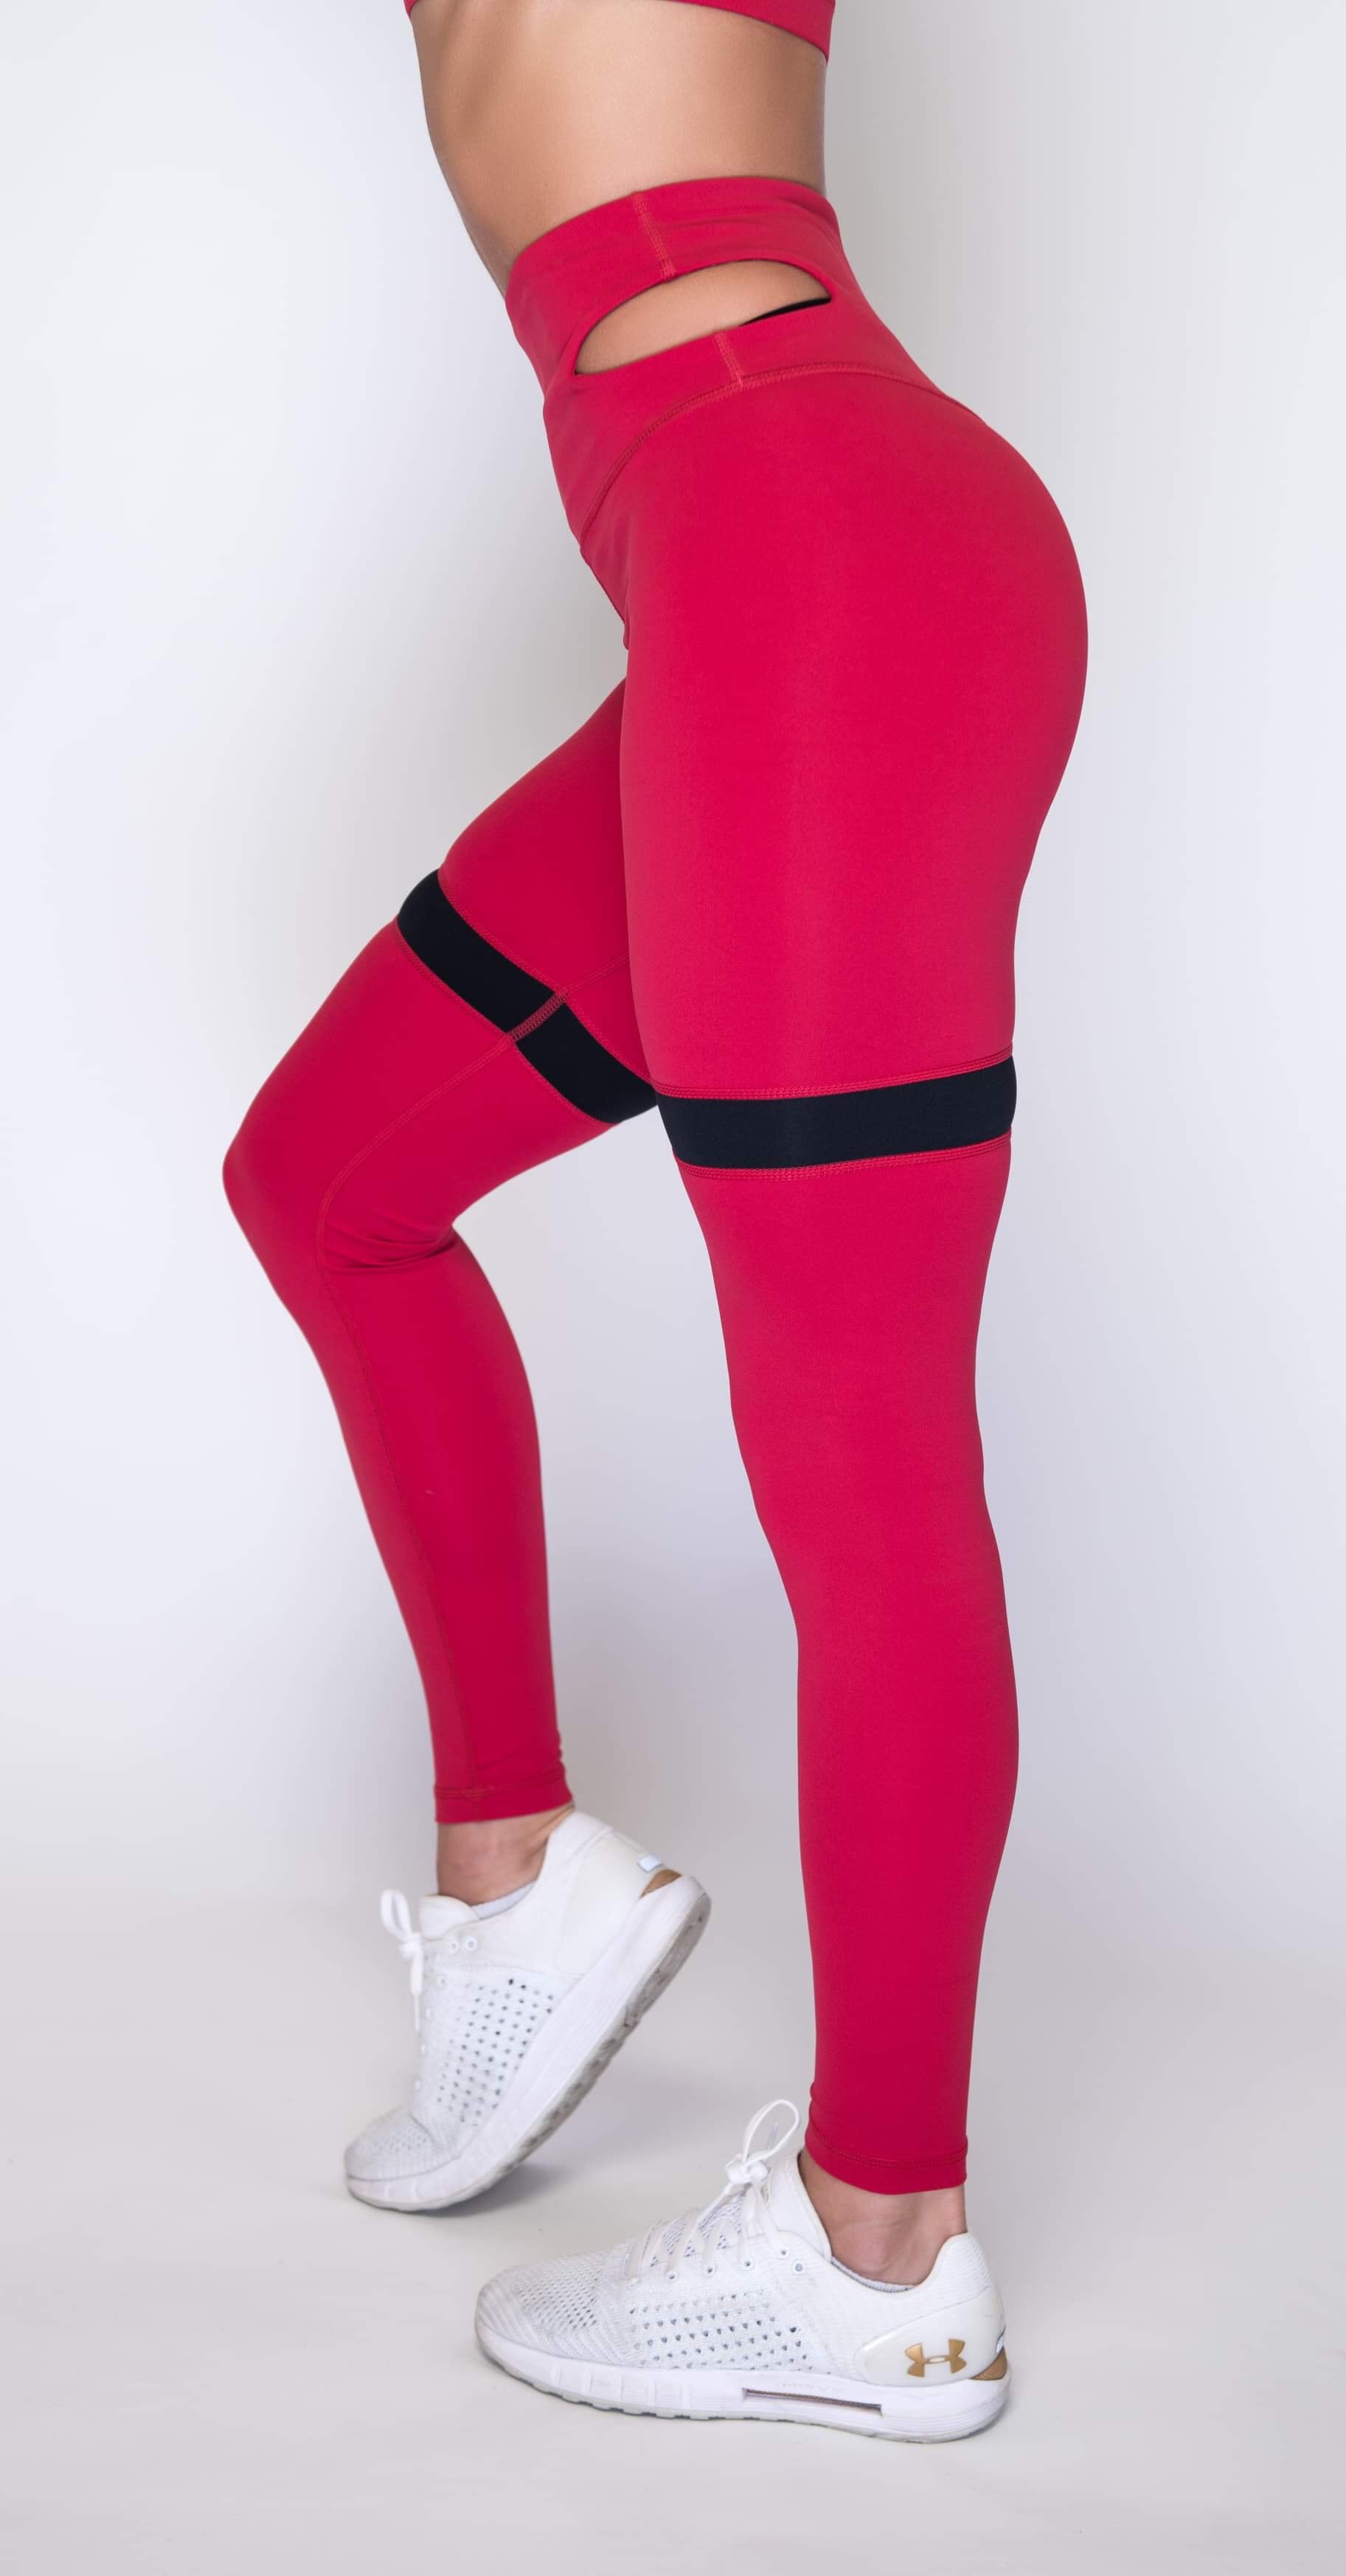 Waist Cutout Flirty Premium Leggings - Jester Red